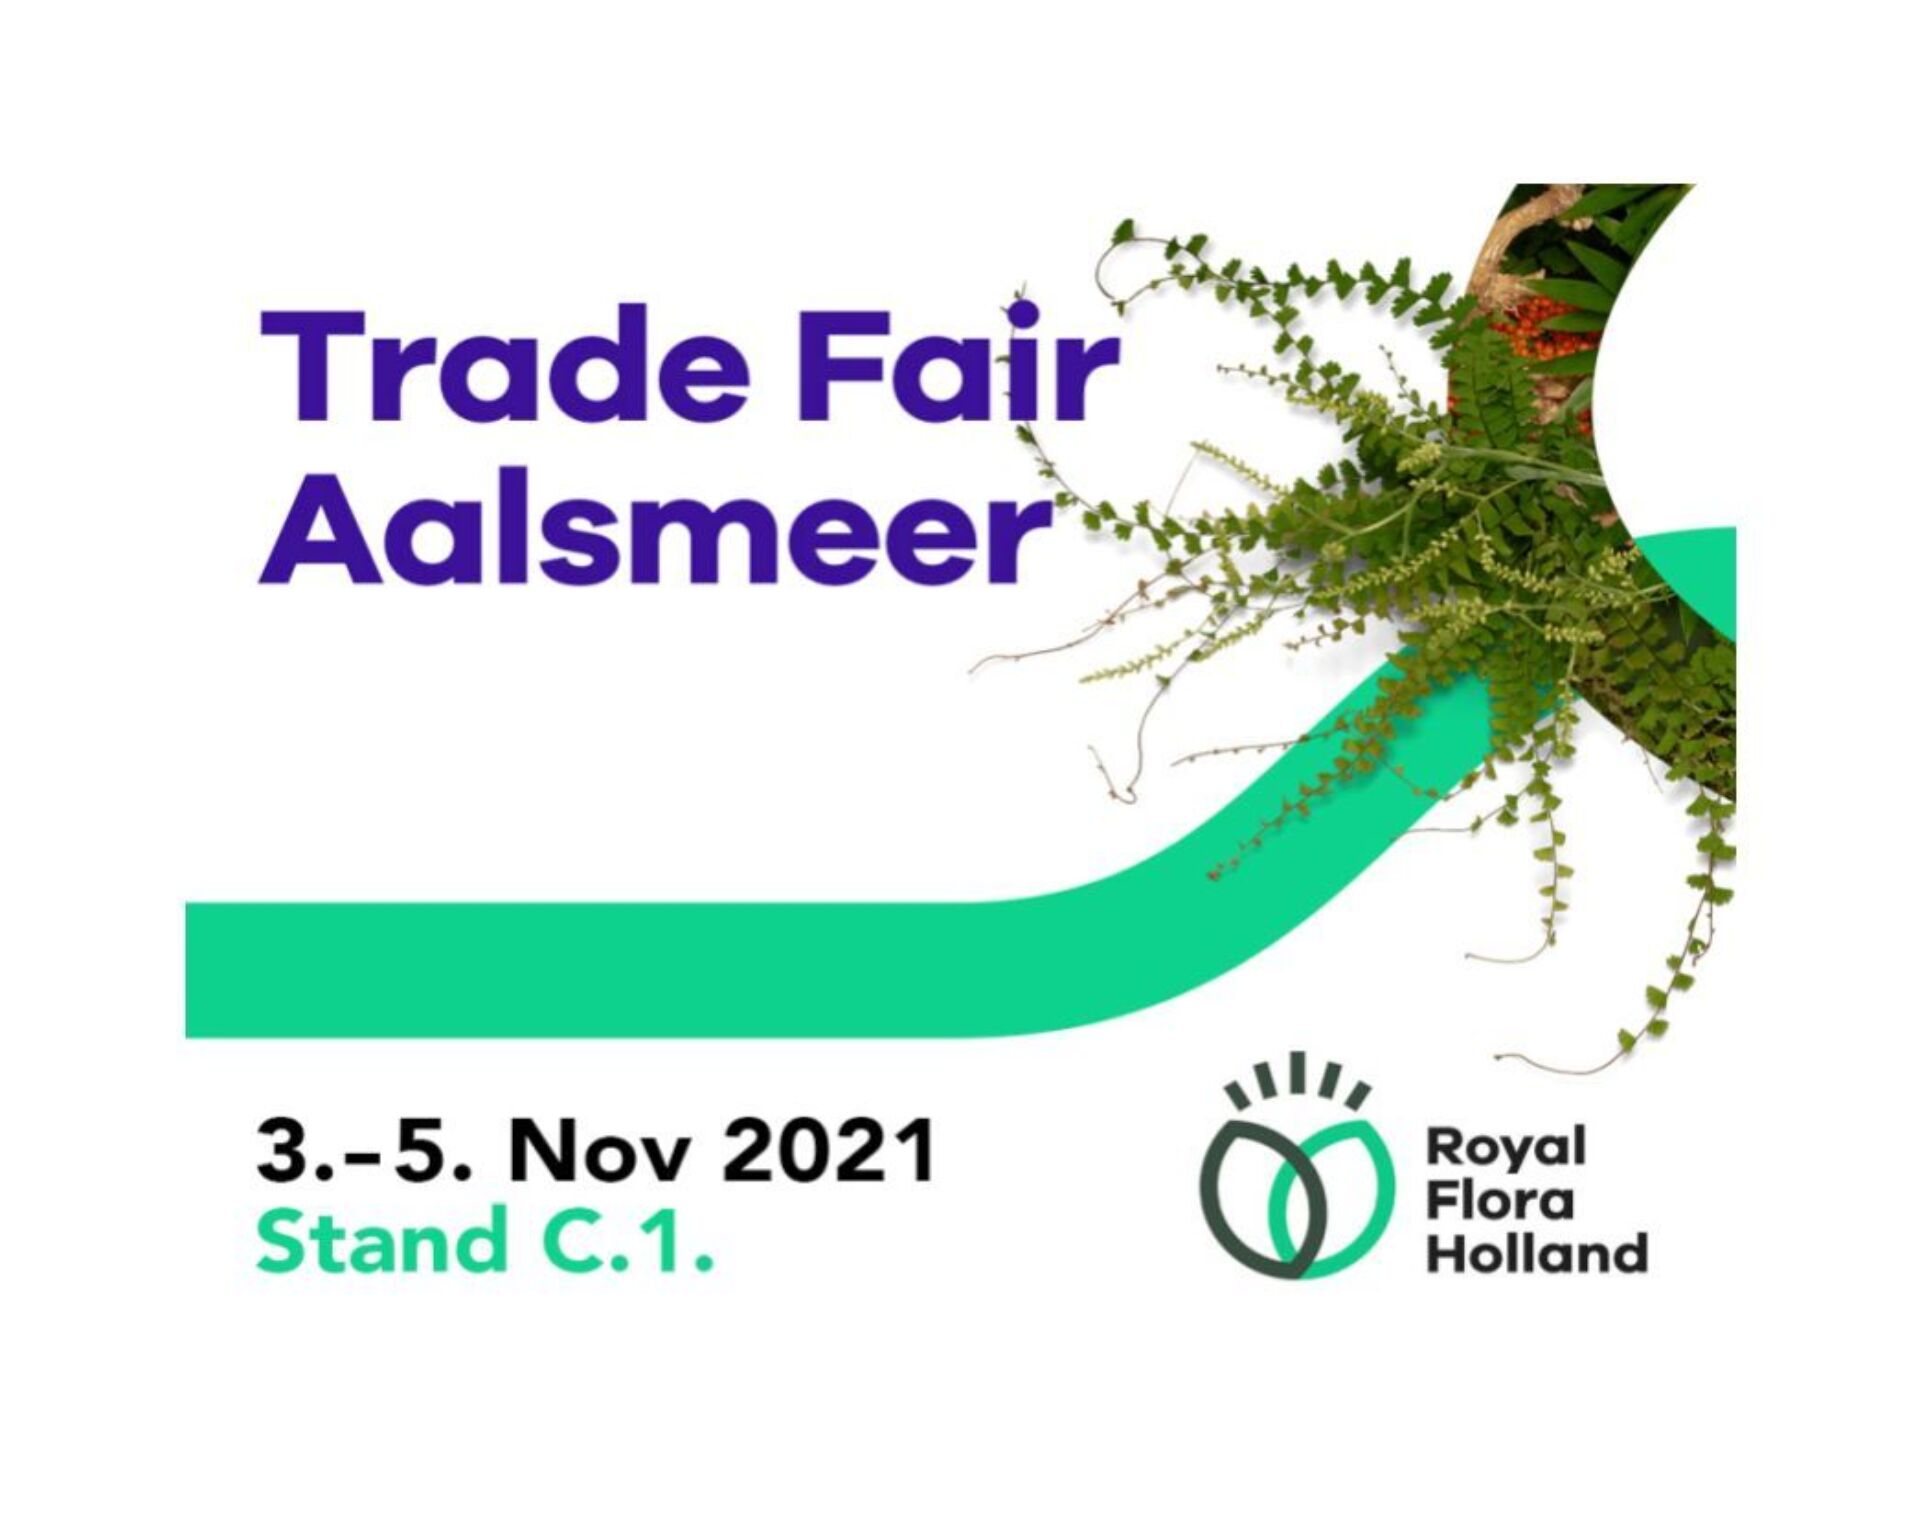 WEBER Verpackungen und die Trade Fair Aalsmeer